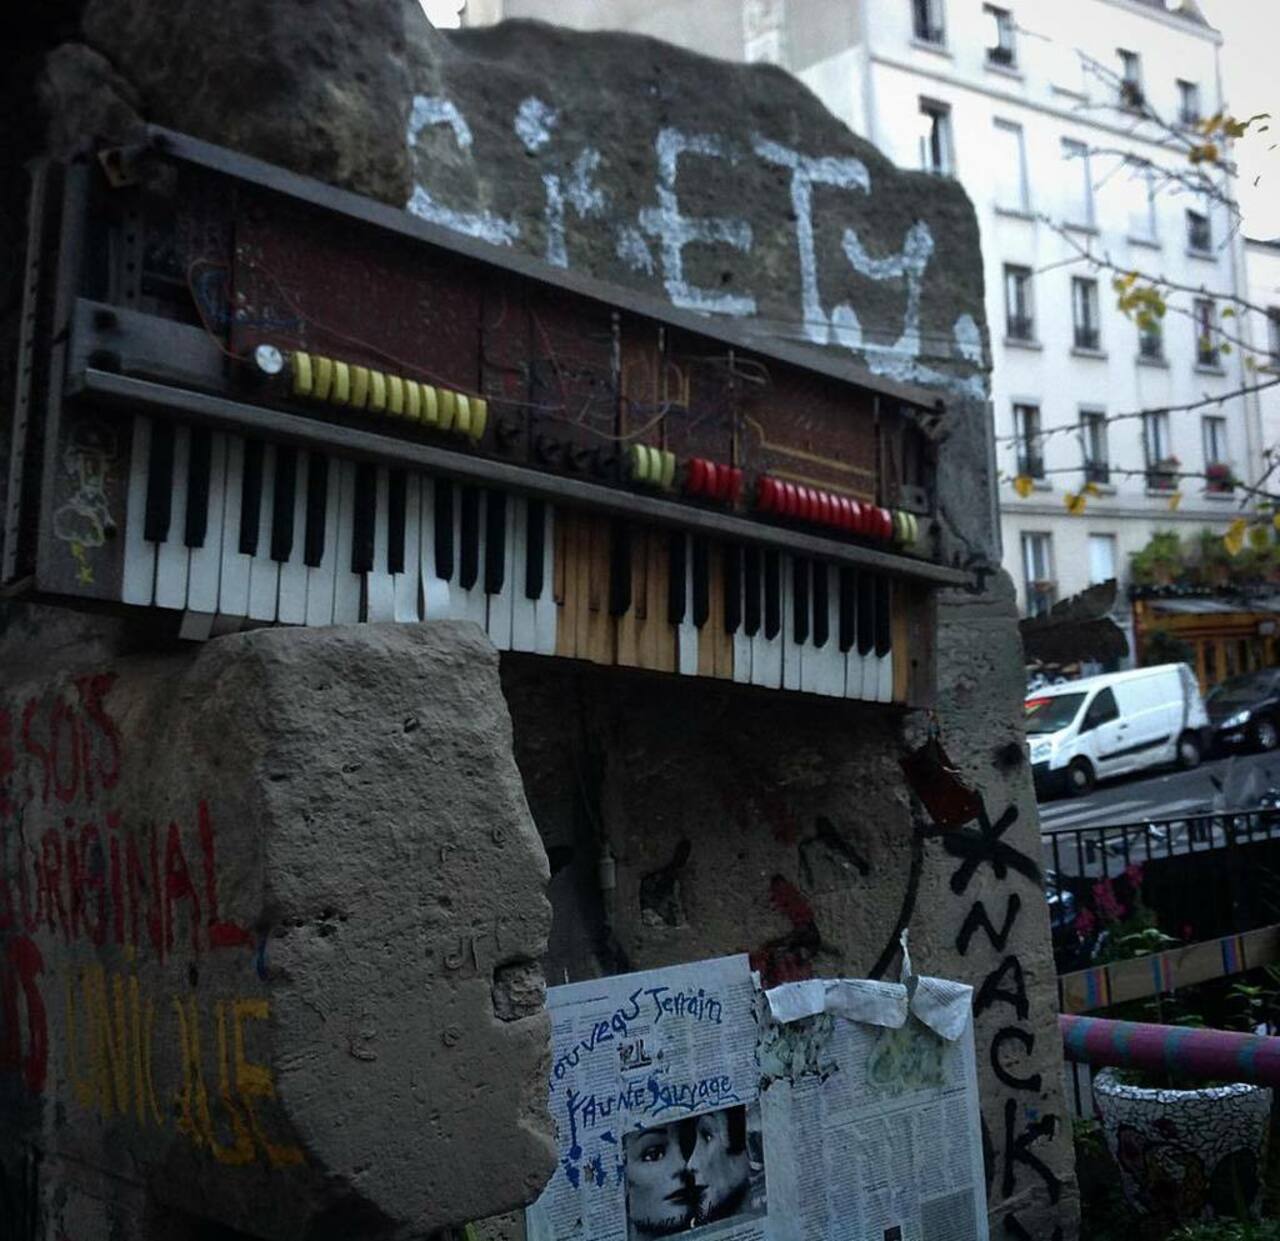 Il jouait du piano debout #street #streetart #streetartparis #graff #graffiti #wallart #sprayart #urban #urbain #ur… https://t.co/tU1YG5A6ej